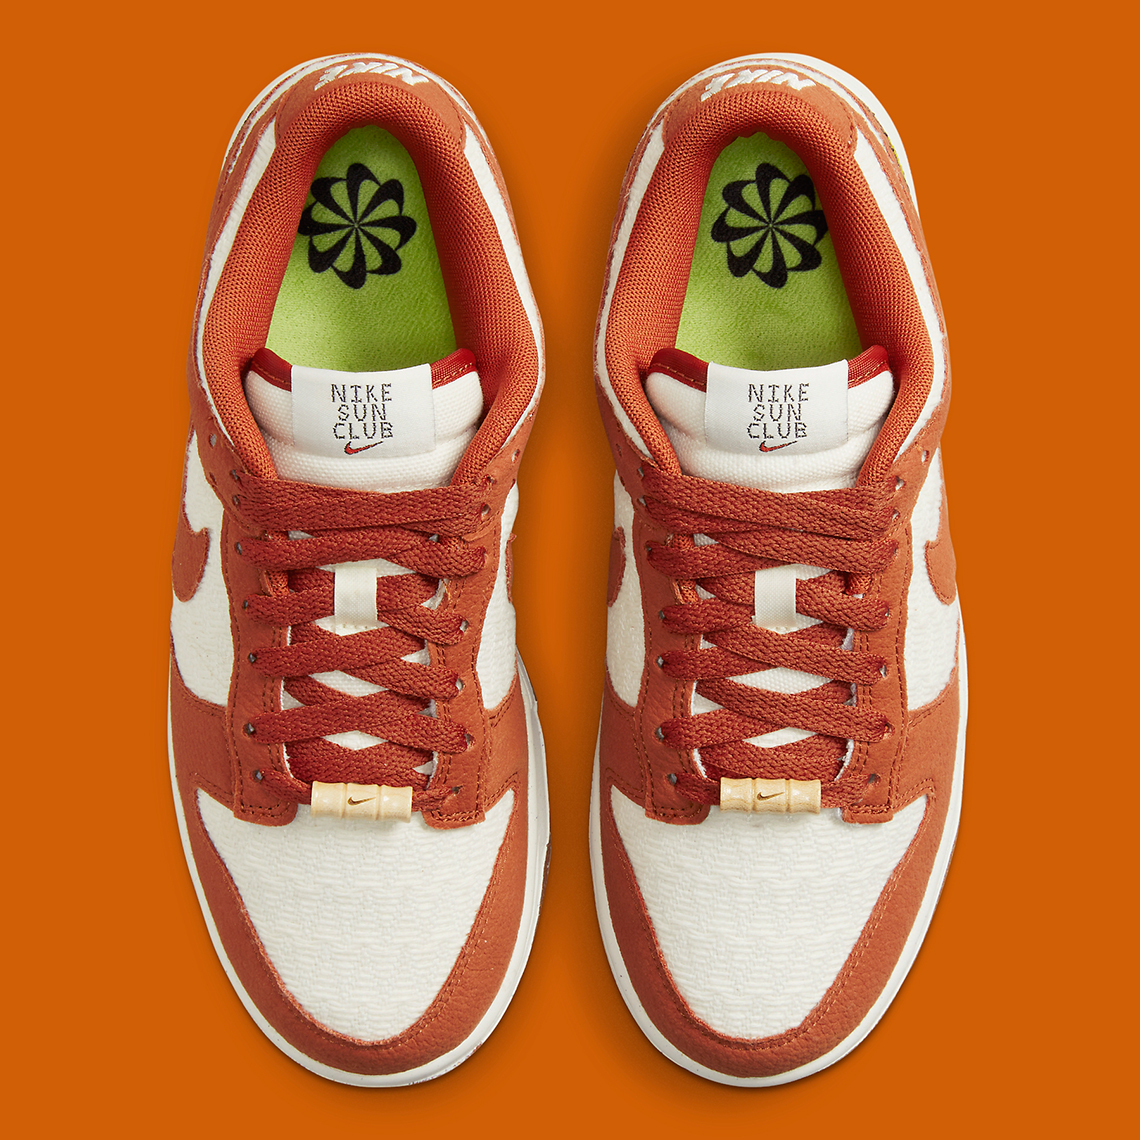 Nike Air Max 95 OG Olive Orange AT2865-200 Sun Club Brown sneakers Date 9